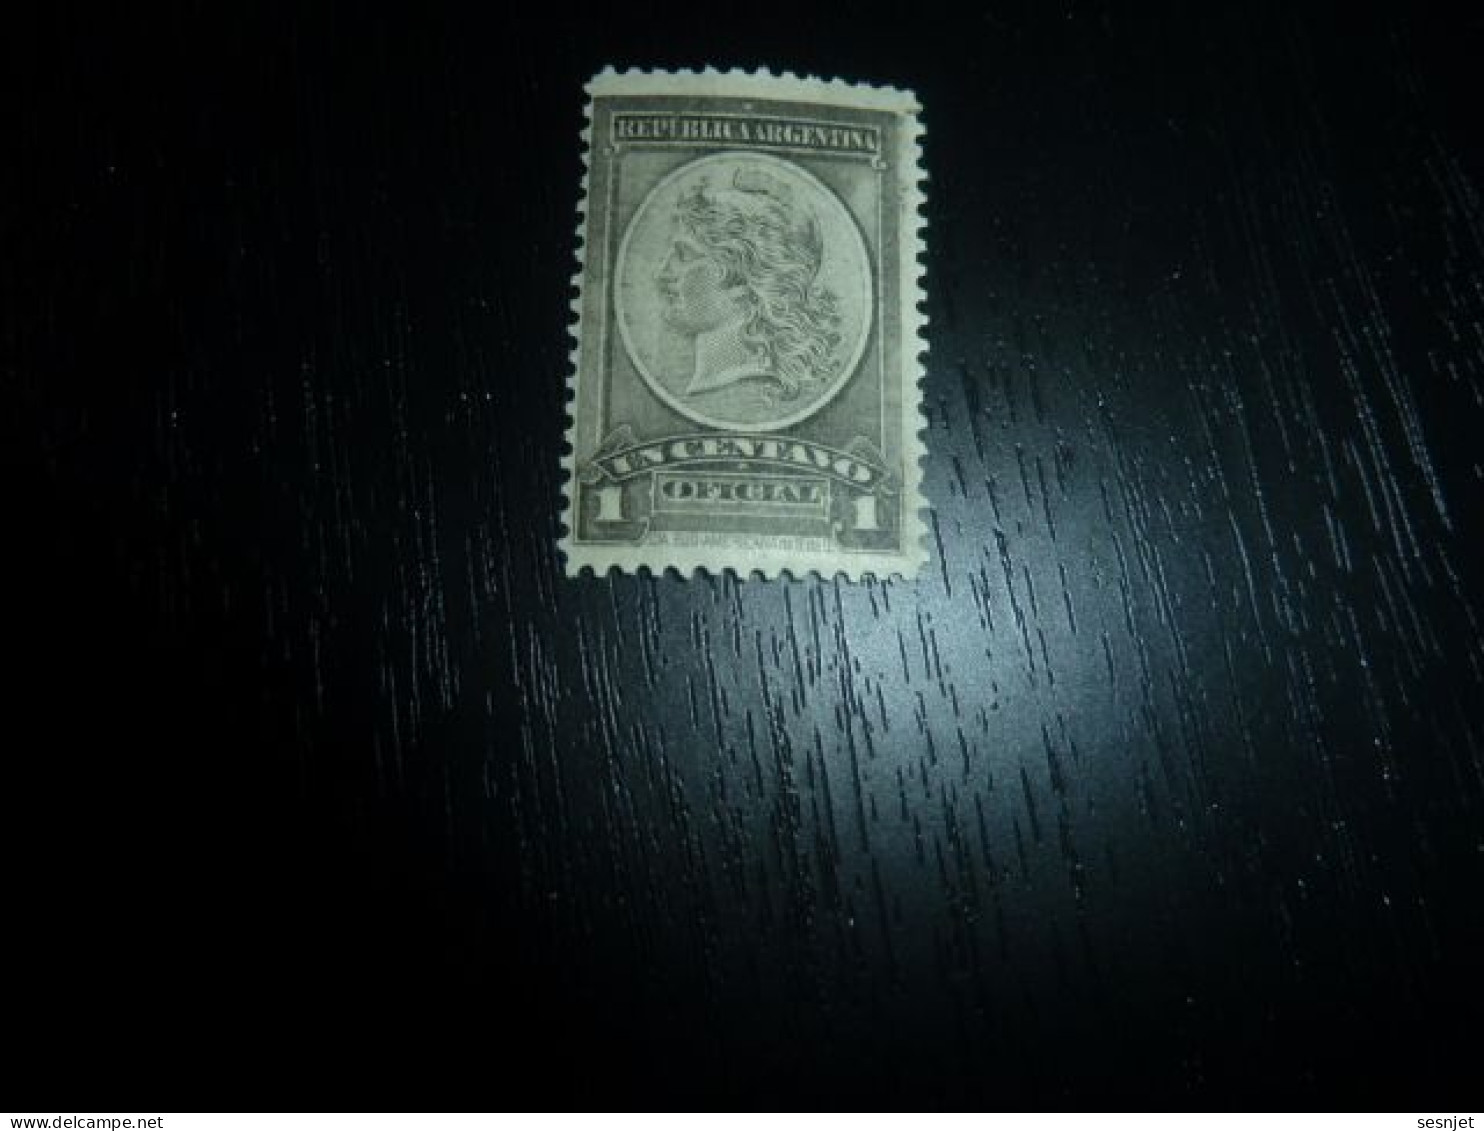 Republica Argentina - Timbre De Service - 1 Centavo - Gris - Yt 30 - Neuf - Année 1901 - - Unused Stamps